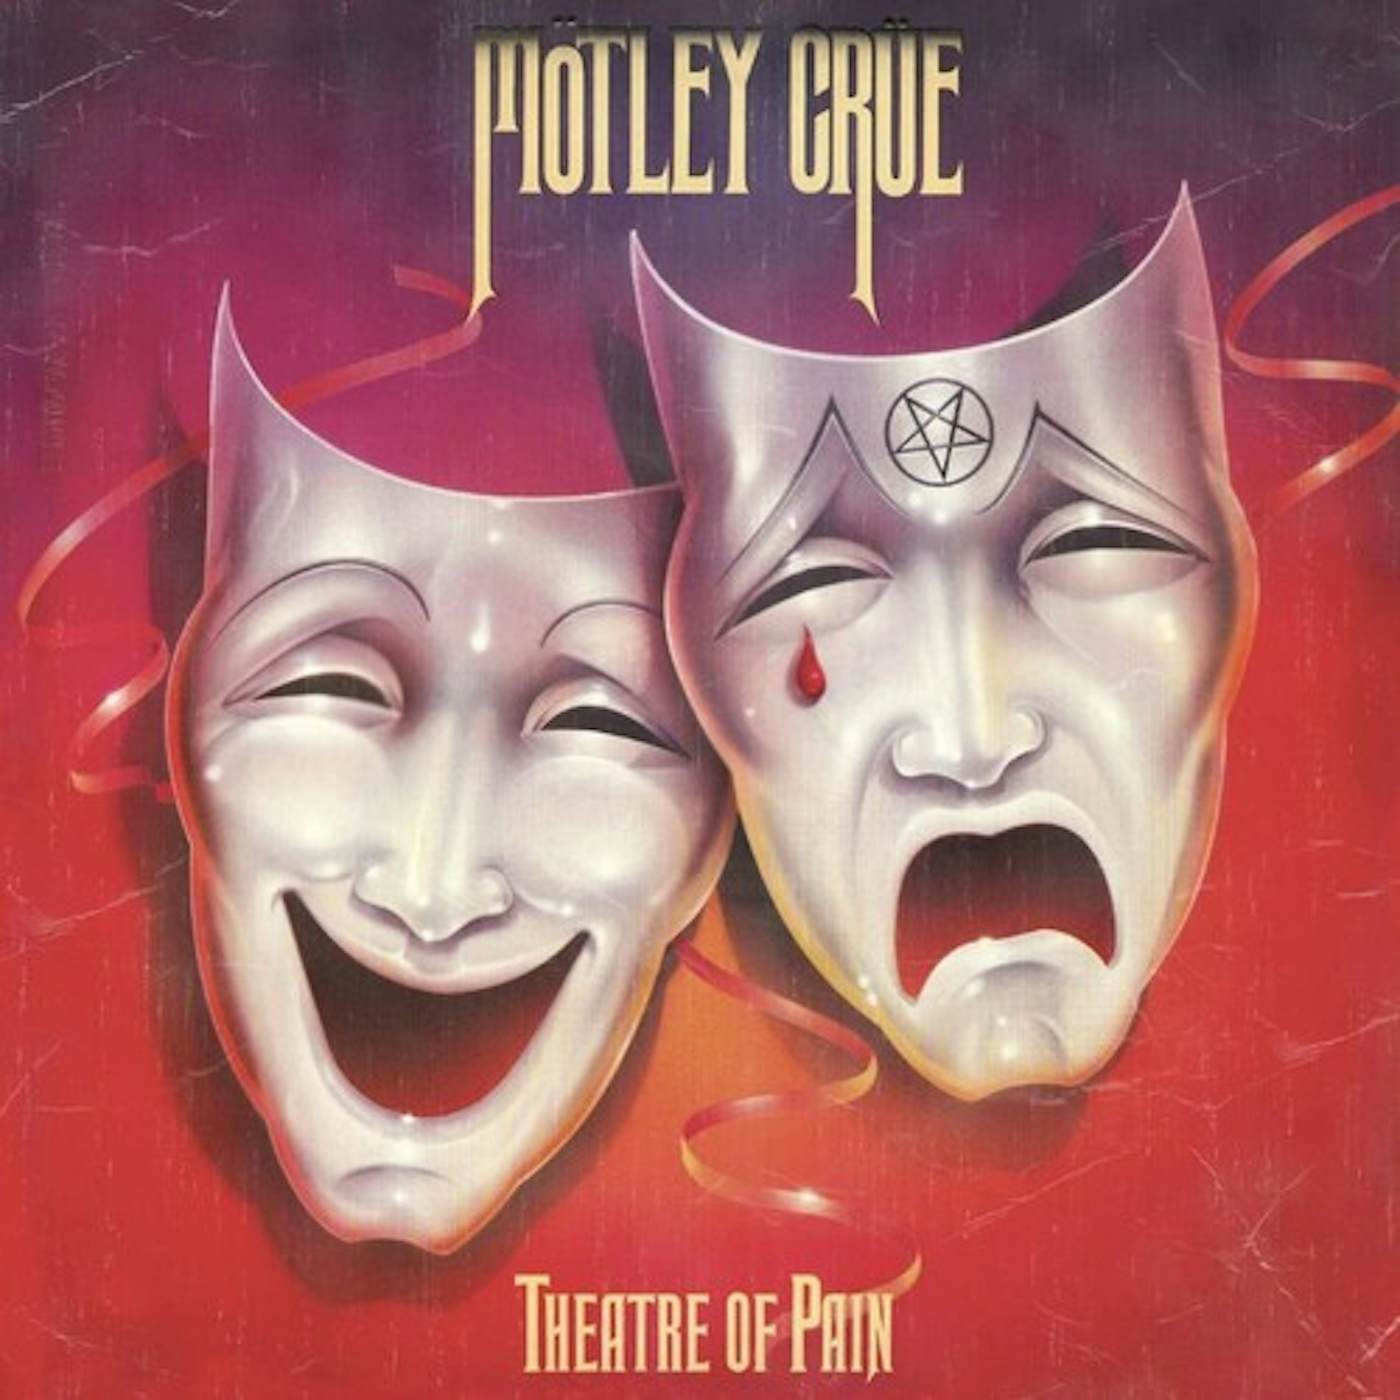 Mötley Crüe Theatre Of Pain Vinyl Record